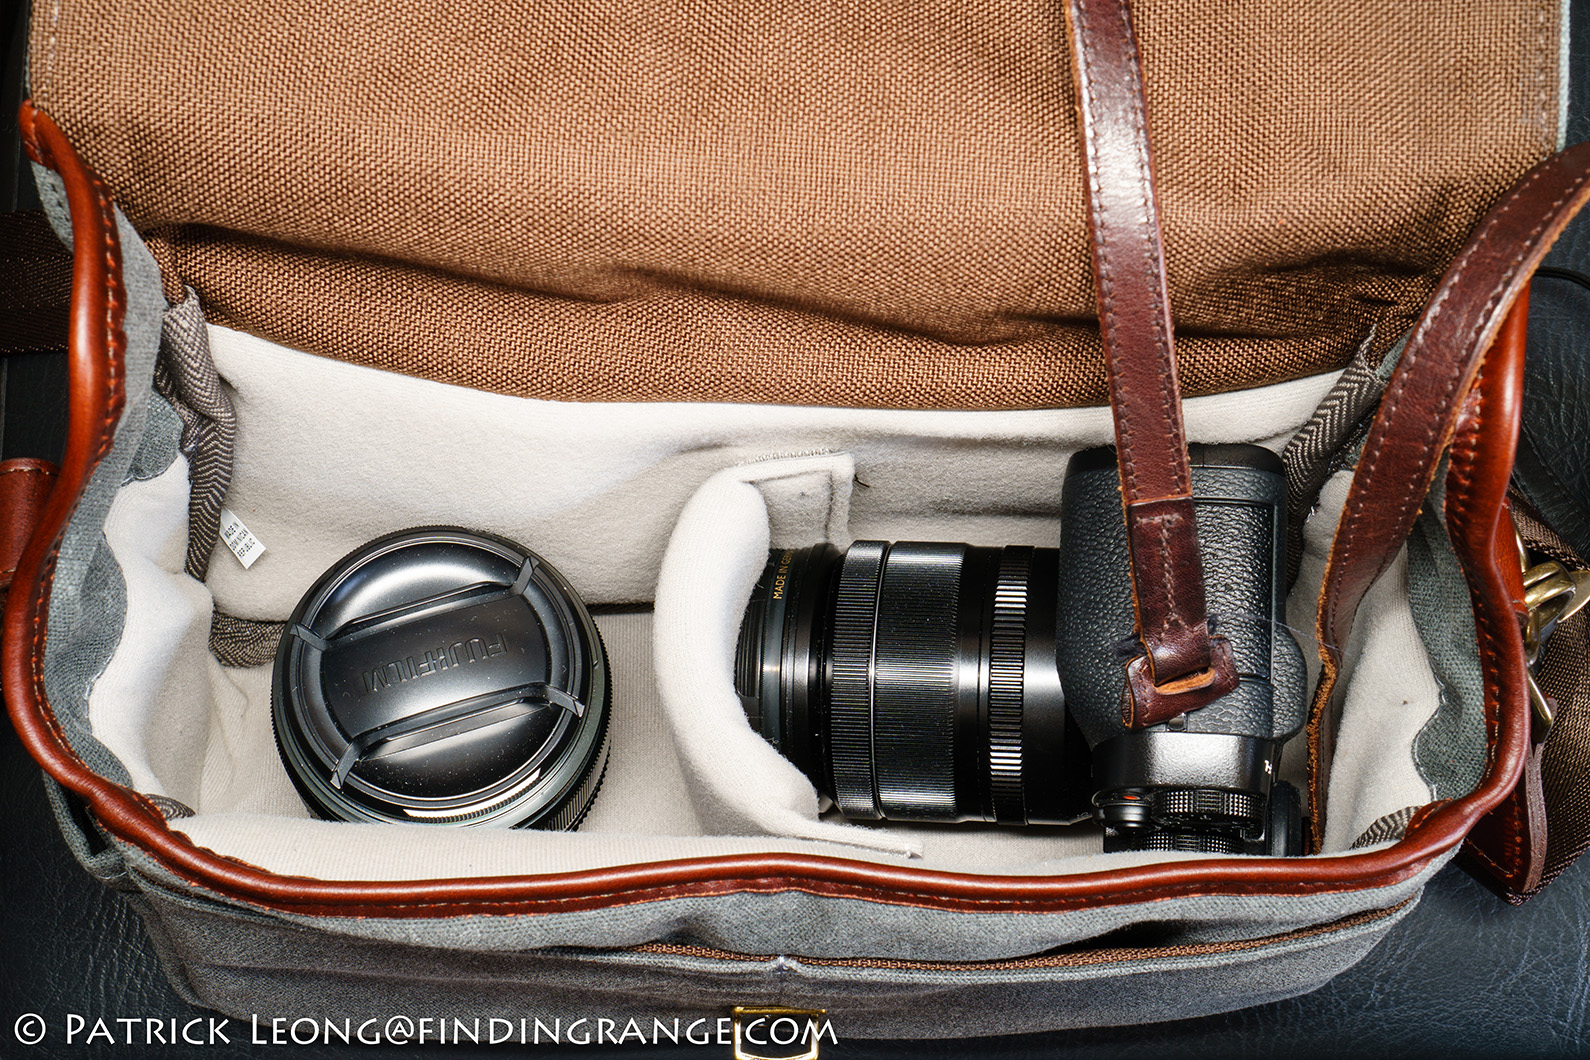 The ONA Bowery camera bag and insert